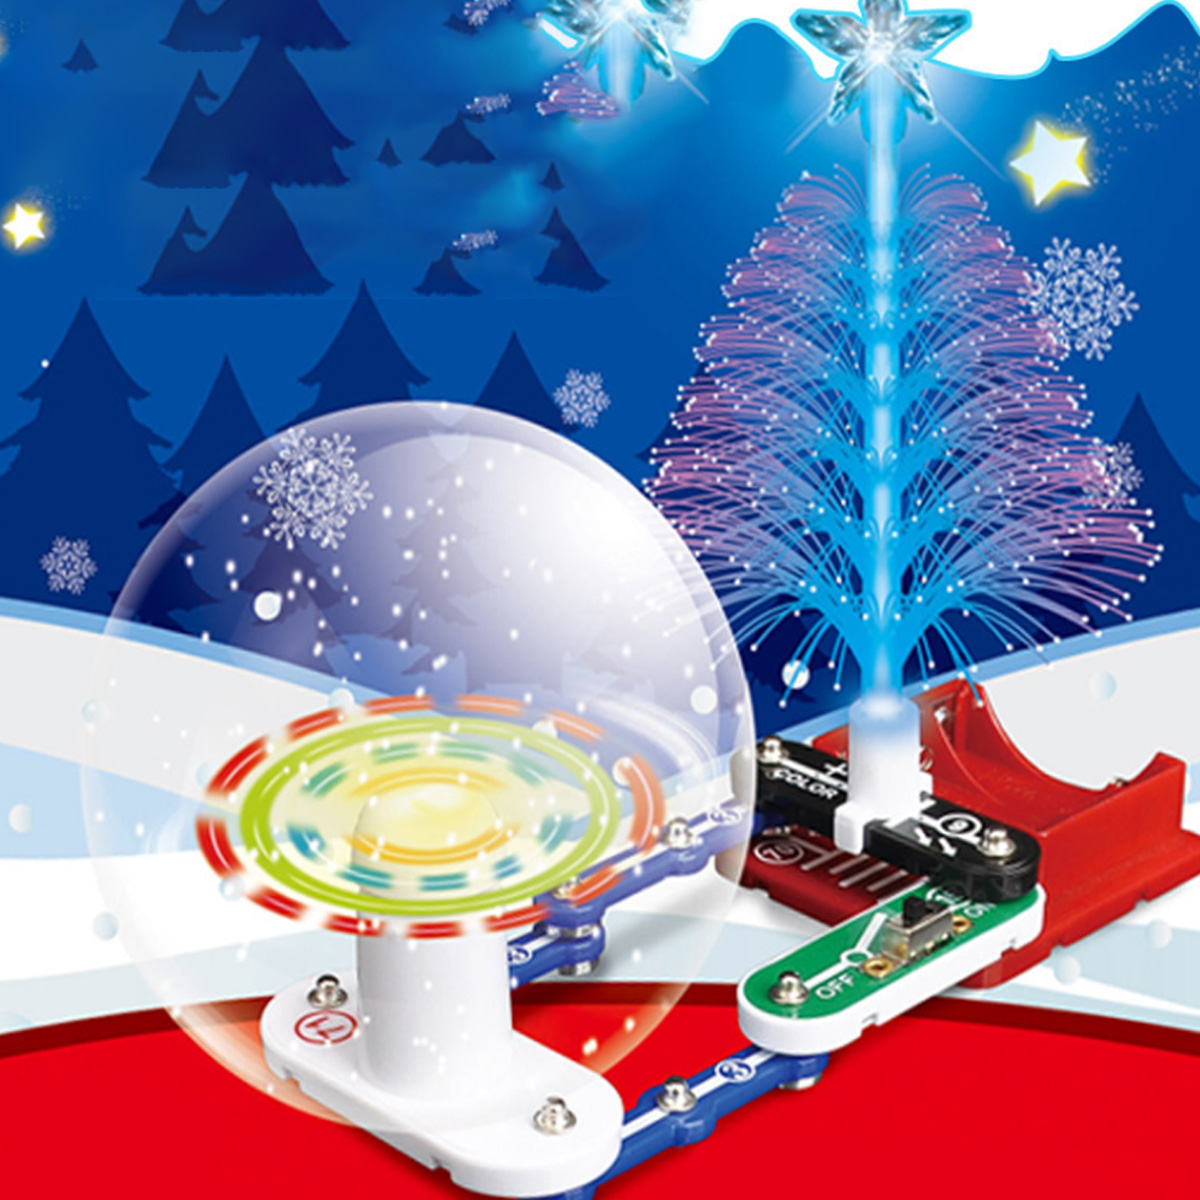 Christmas-Tree-DIY-Toys-Kids-Electronics-Blocks-Educational-Snap-Circuit-Kit-Discovery-Science-1599054-1